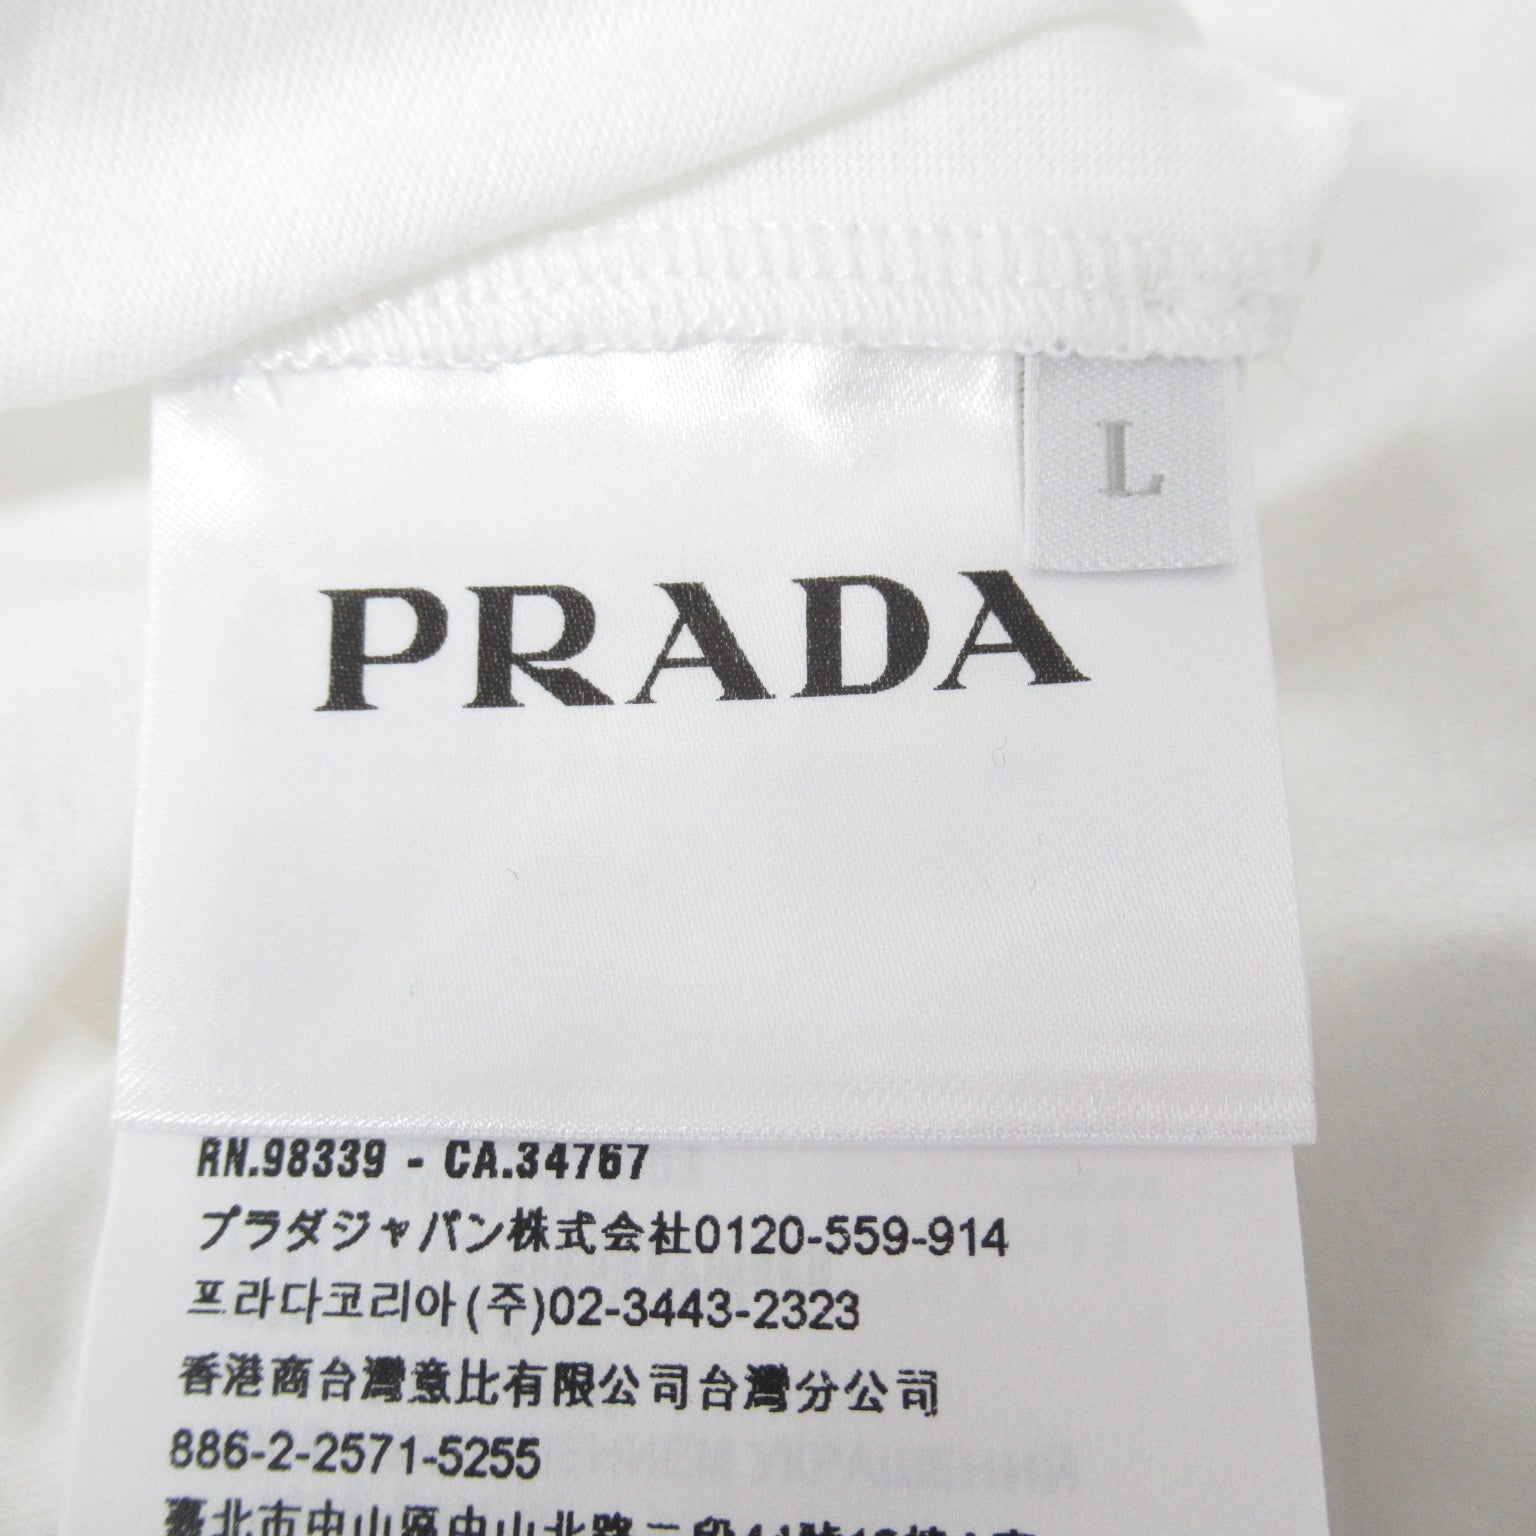 Prada  Half-Hand   Tops Cotton  White 135664 1QJD